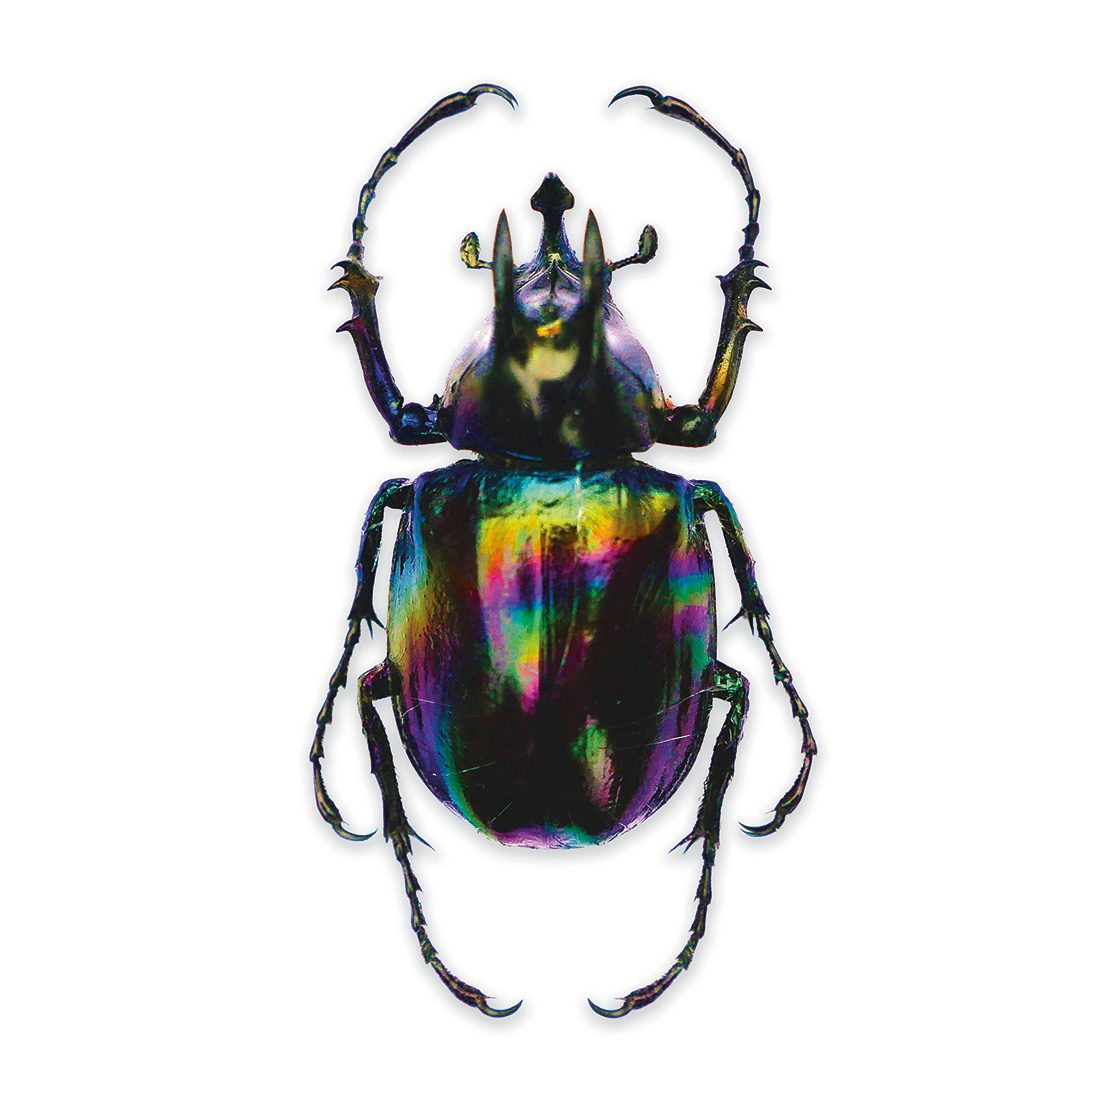 Megasoma actaeon dynastinae - Dynaste beetle - Coleoptere dynaste